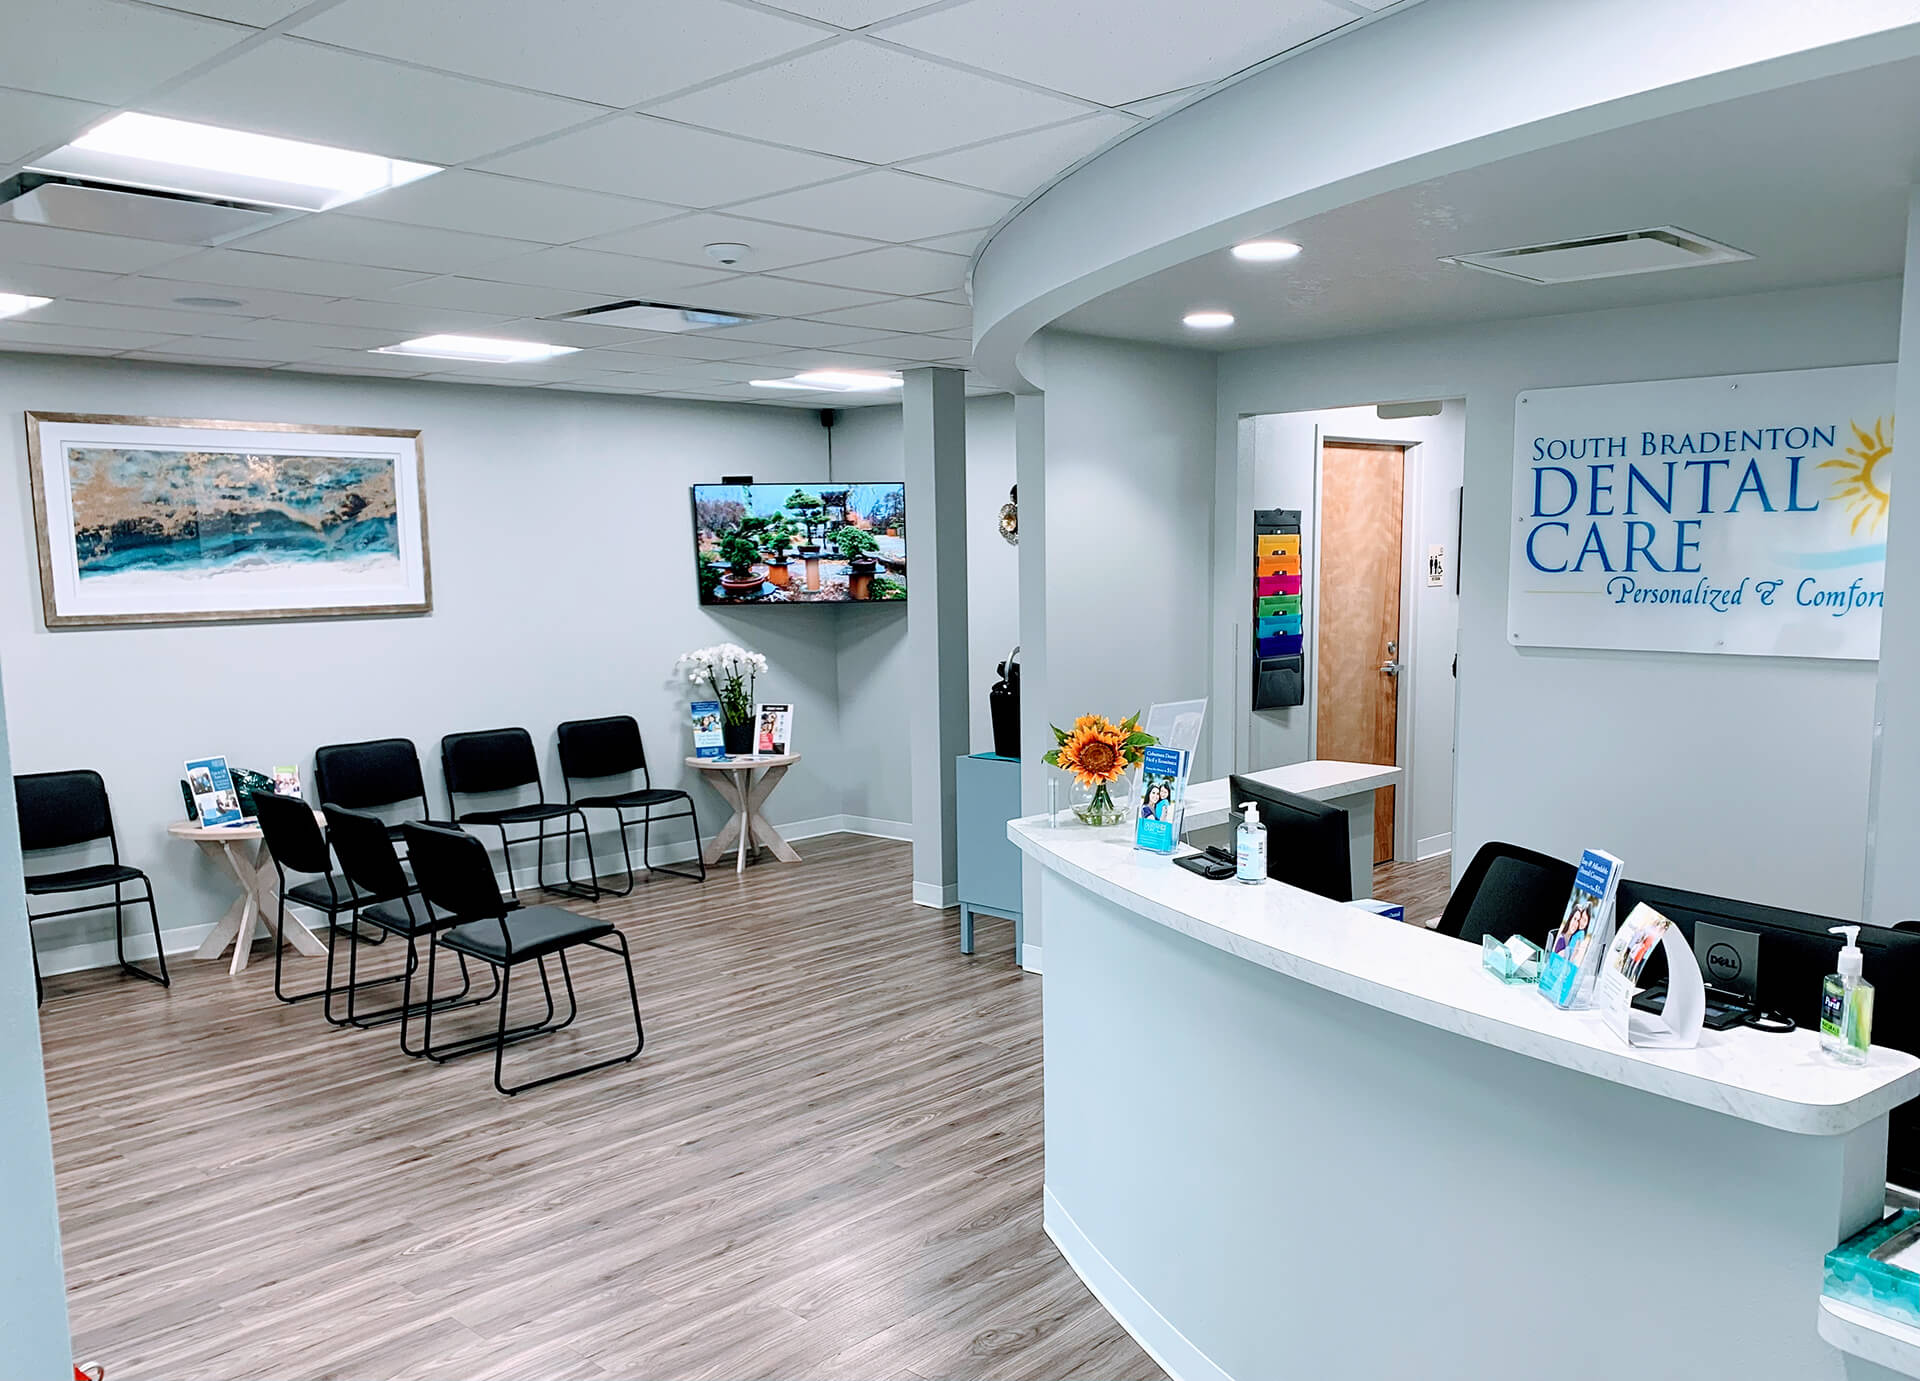 1 Dentist in South Bradenton, FL | Family & Emergency Dentists Near Me |  South Bradenton Dental Care